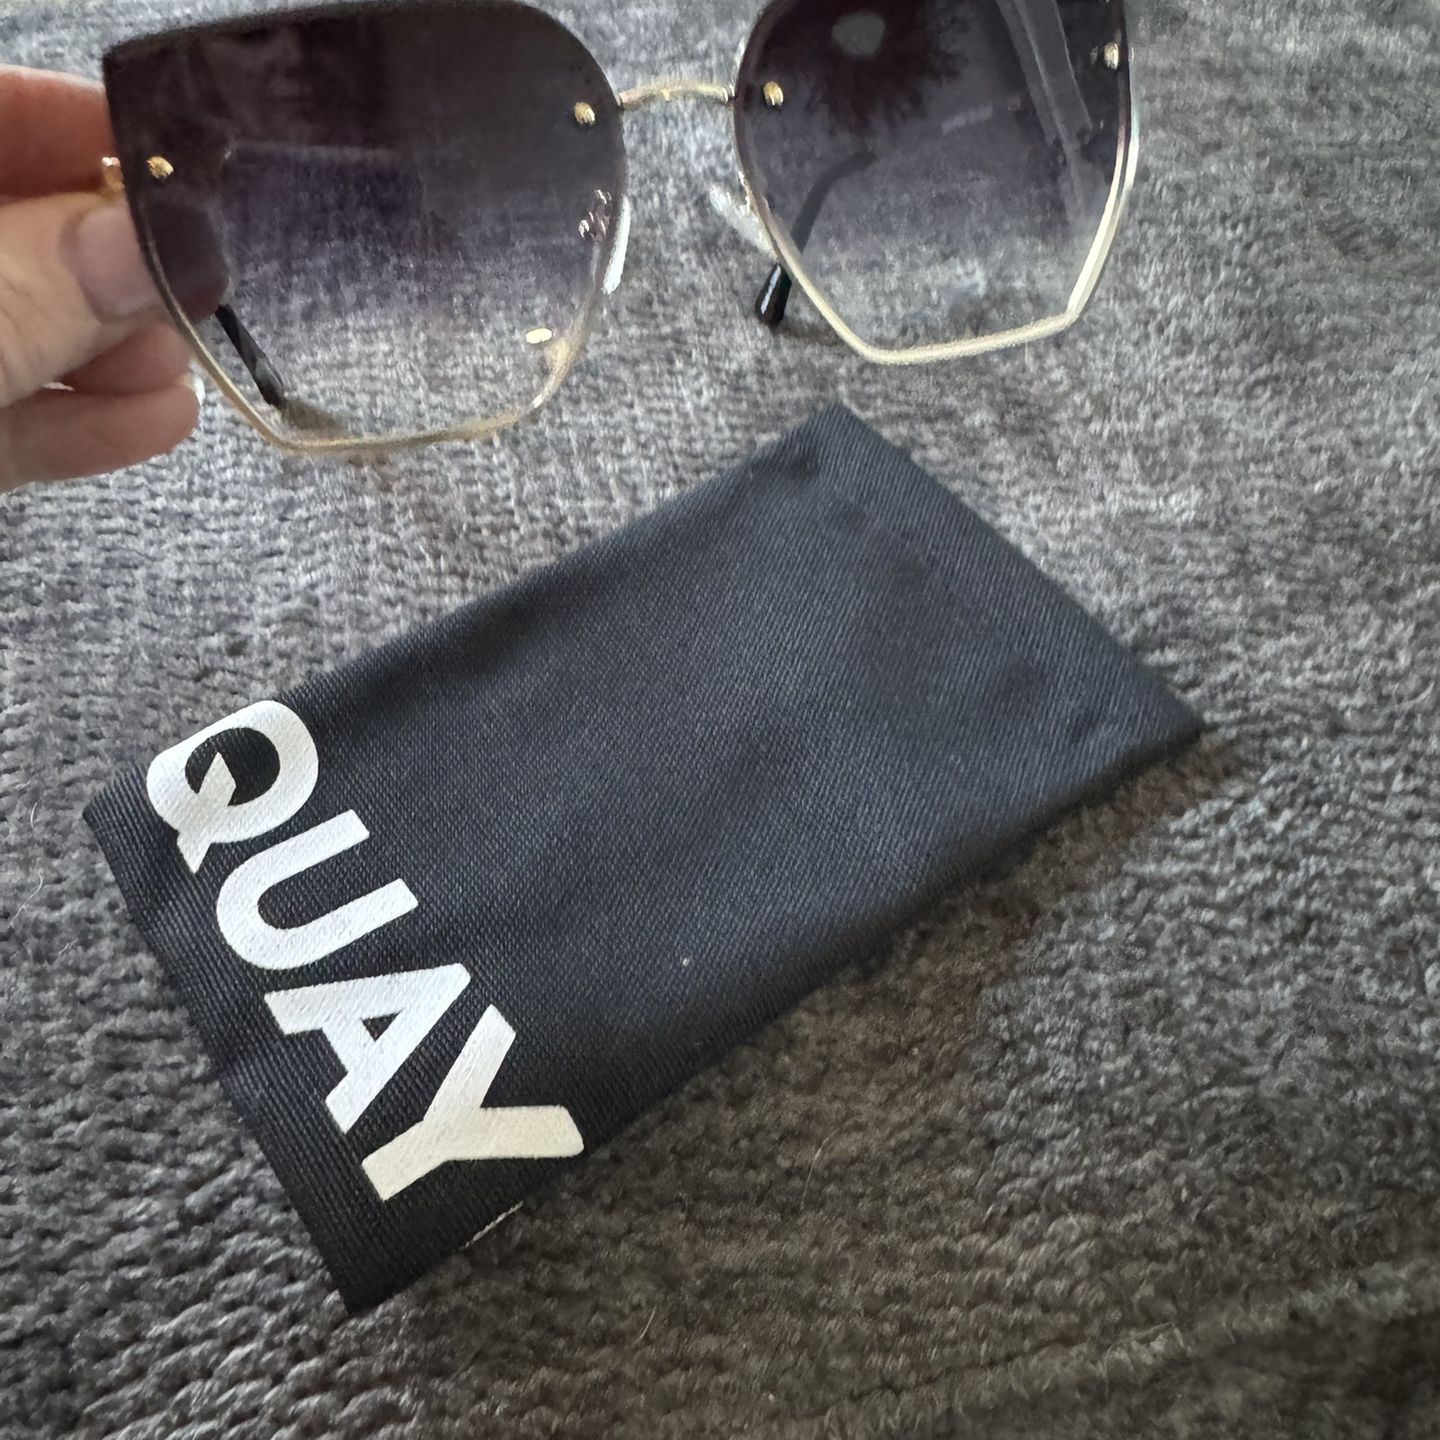 Quay sunglasses Brand New and never worn